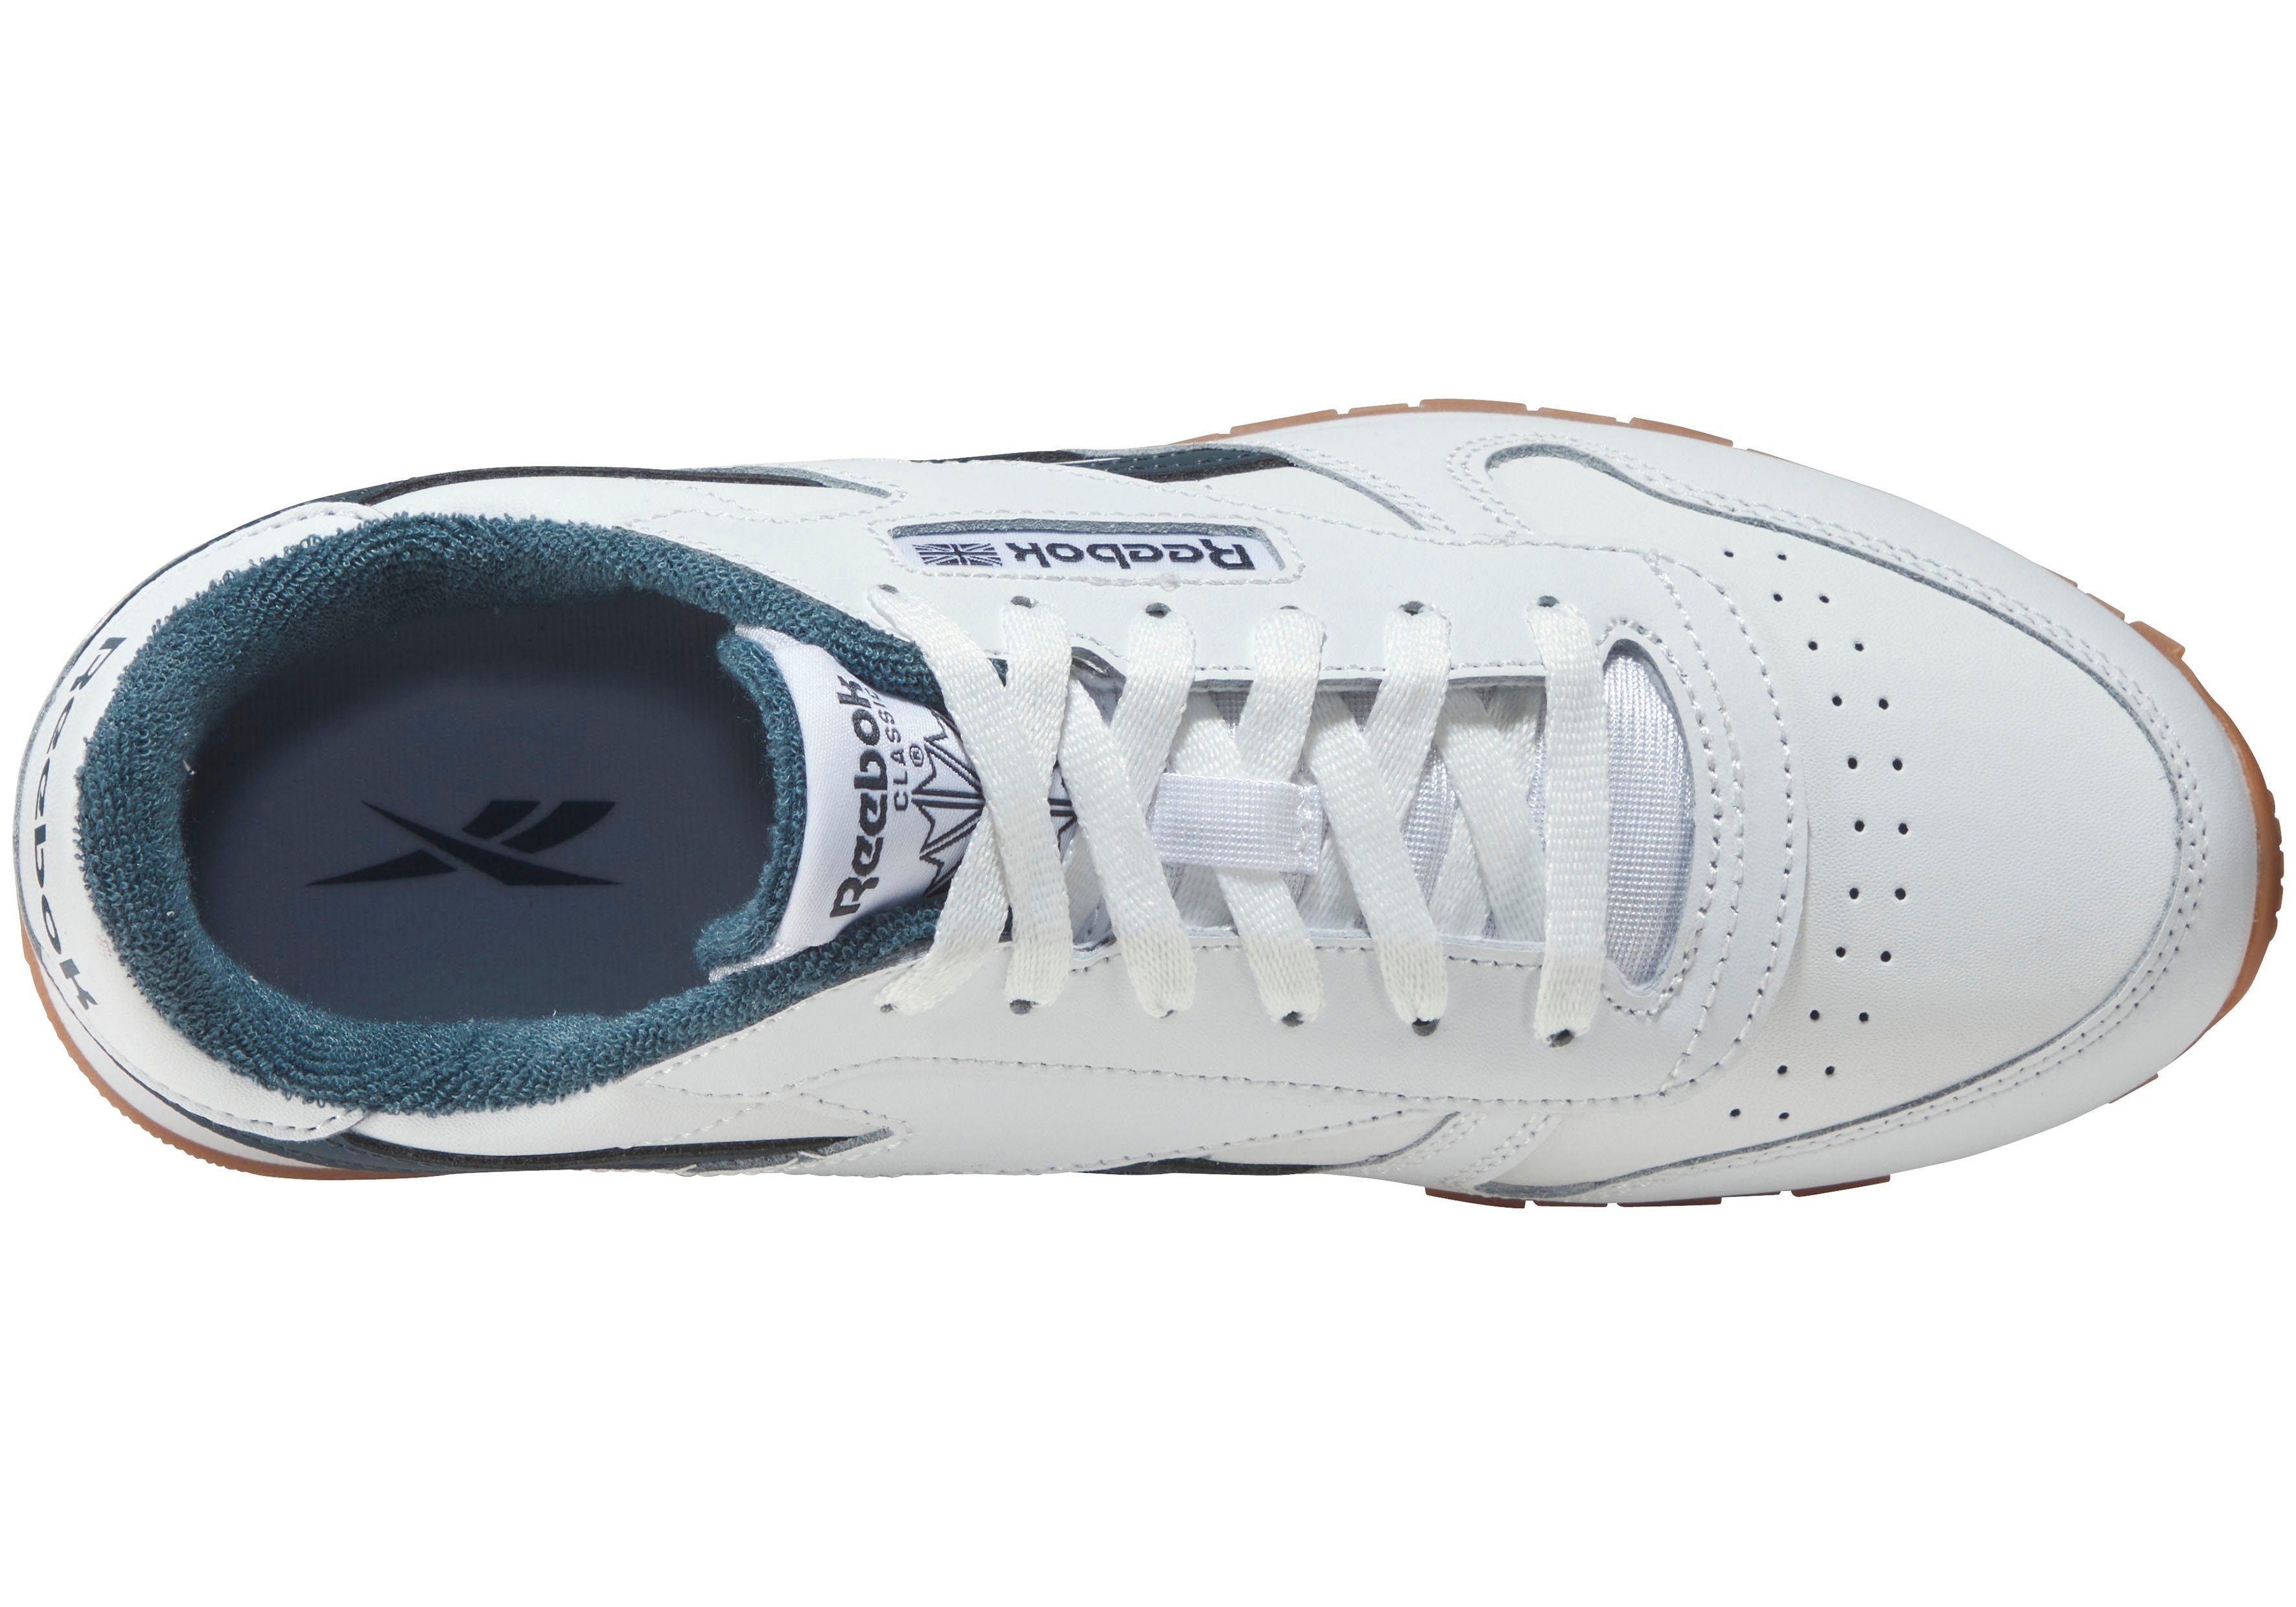 Sneaker LEATHER Classic Reebok weiß-blau CLASSIC